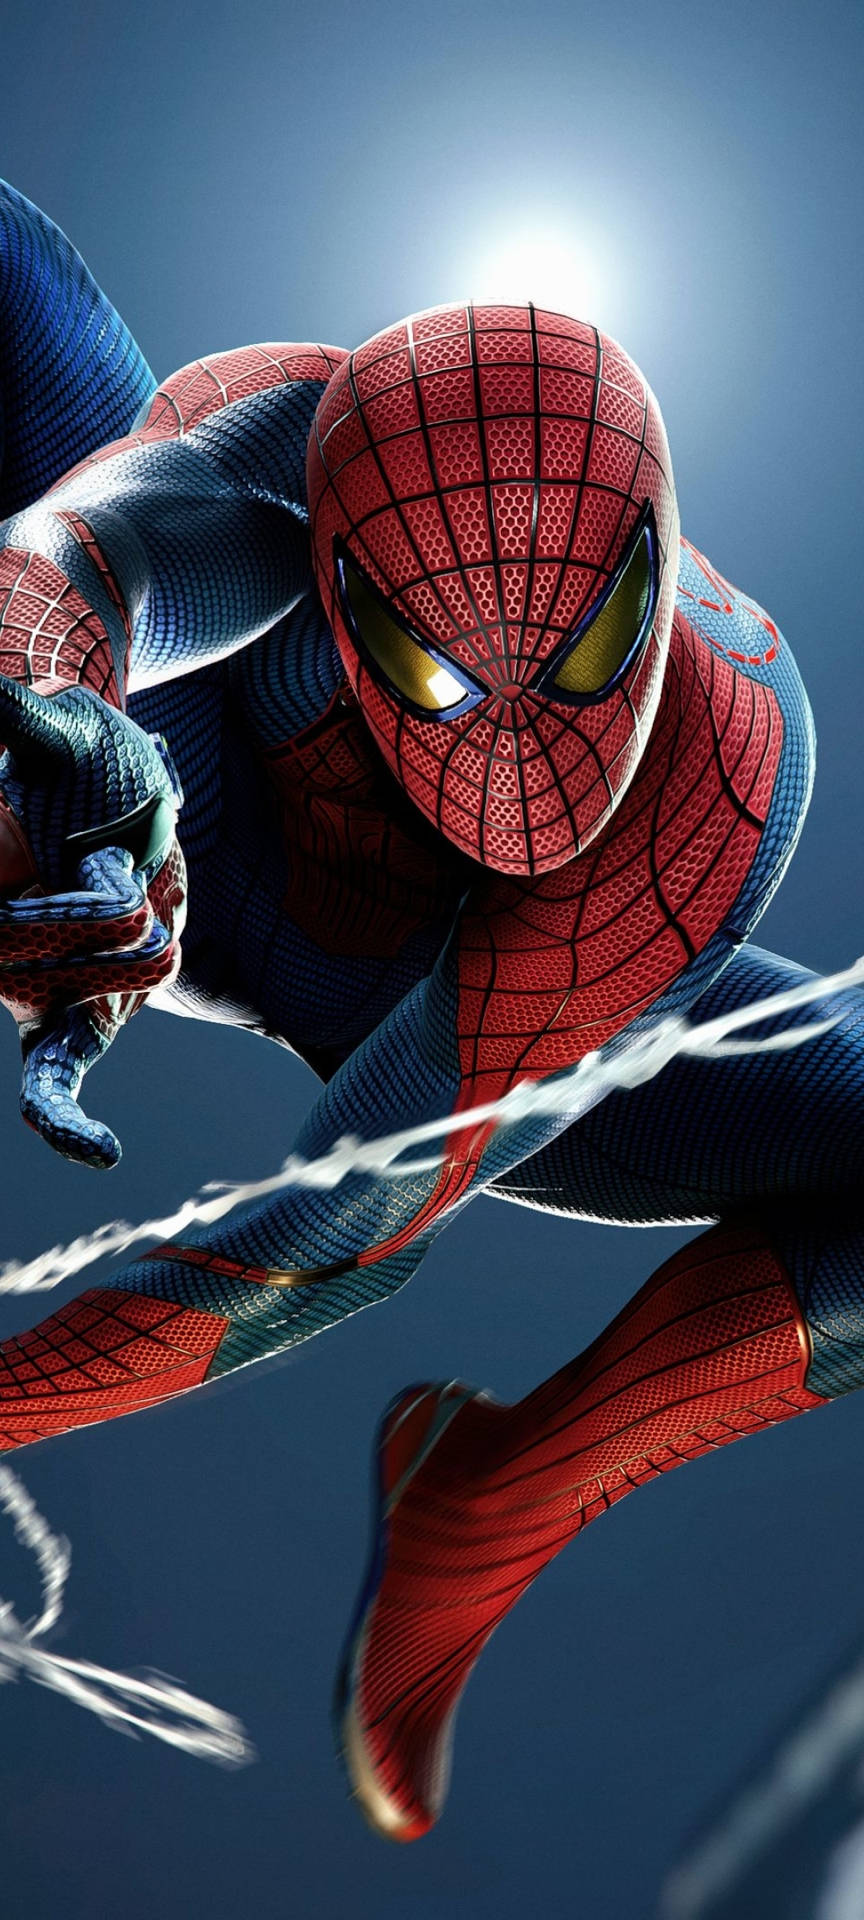 Spider Man Superhero Mobile Background